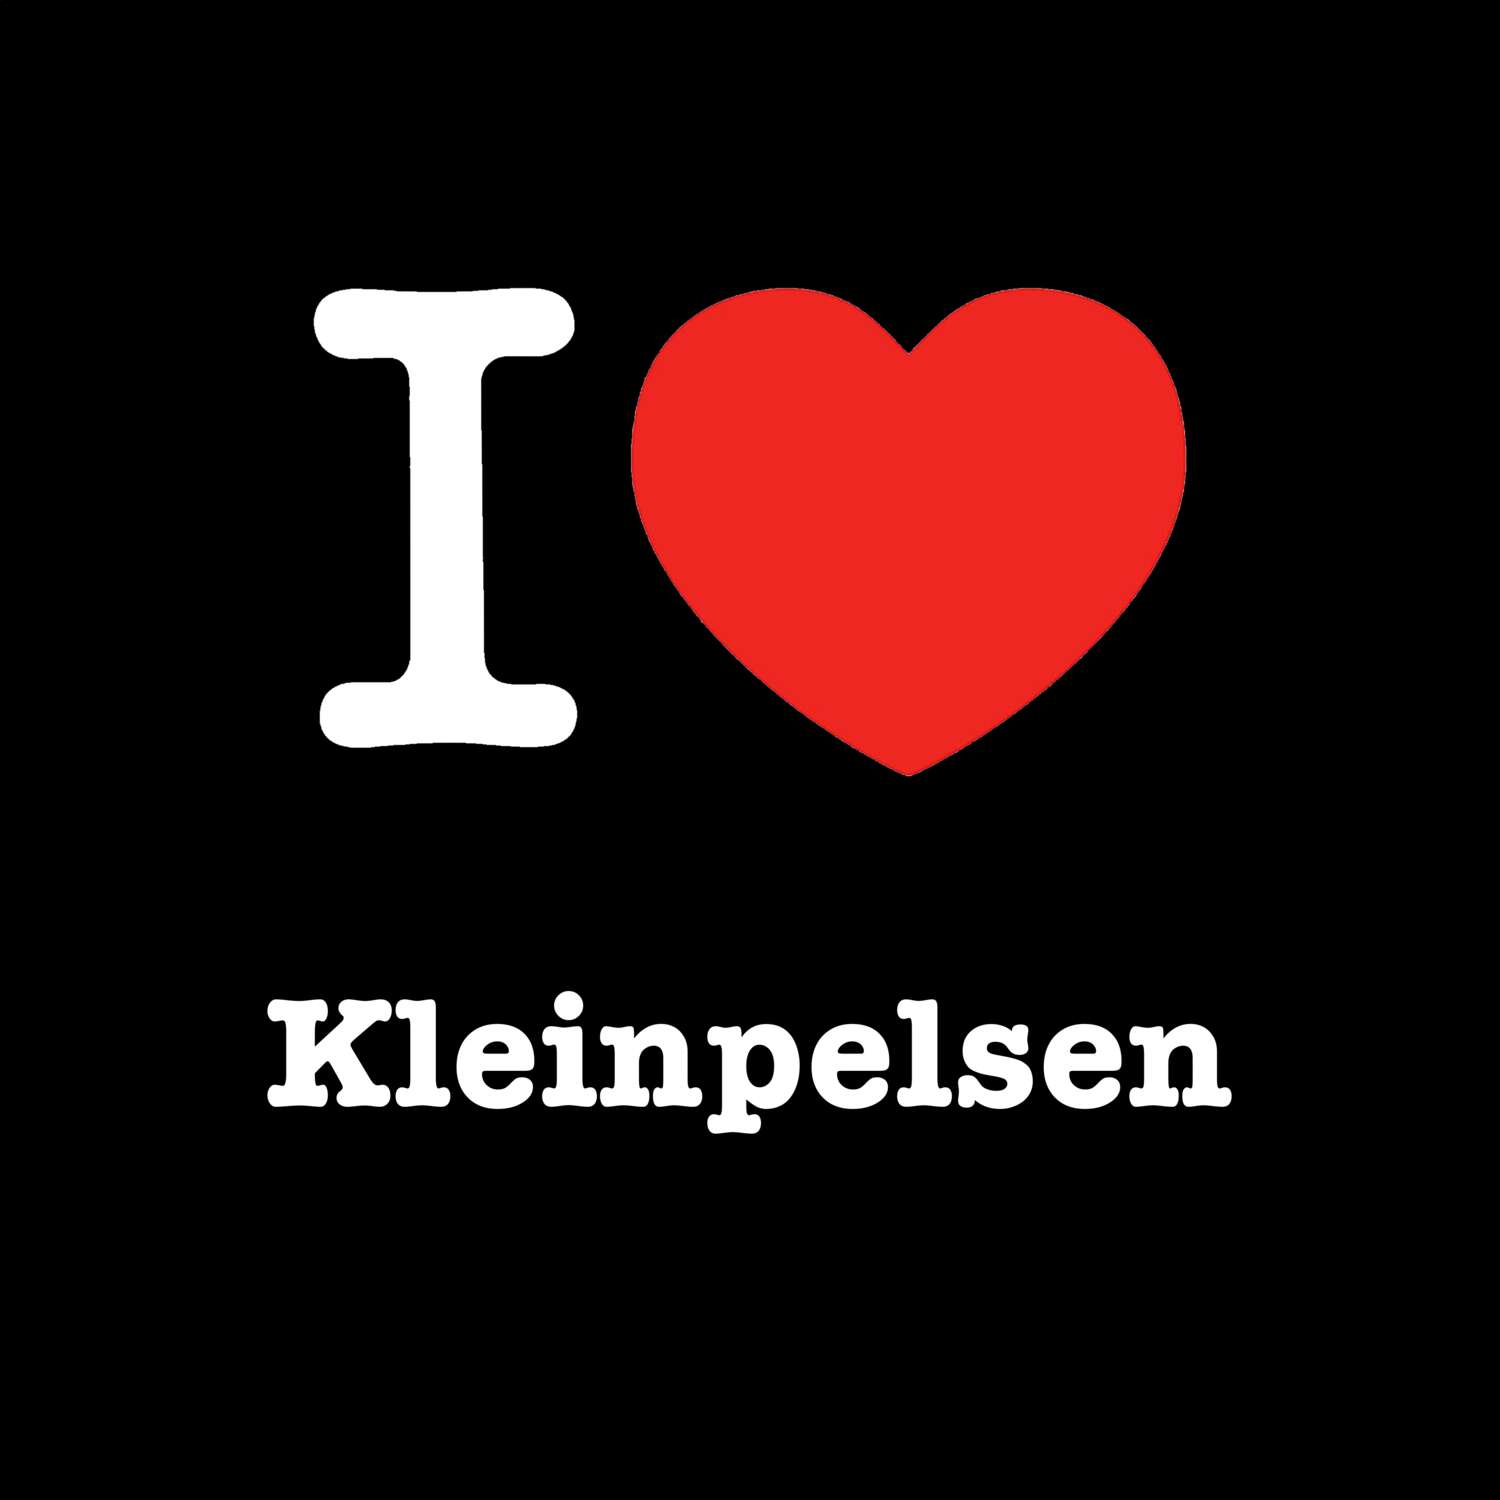 Kleinpelsen T-Shirt »I love«